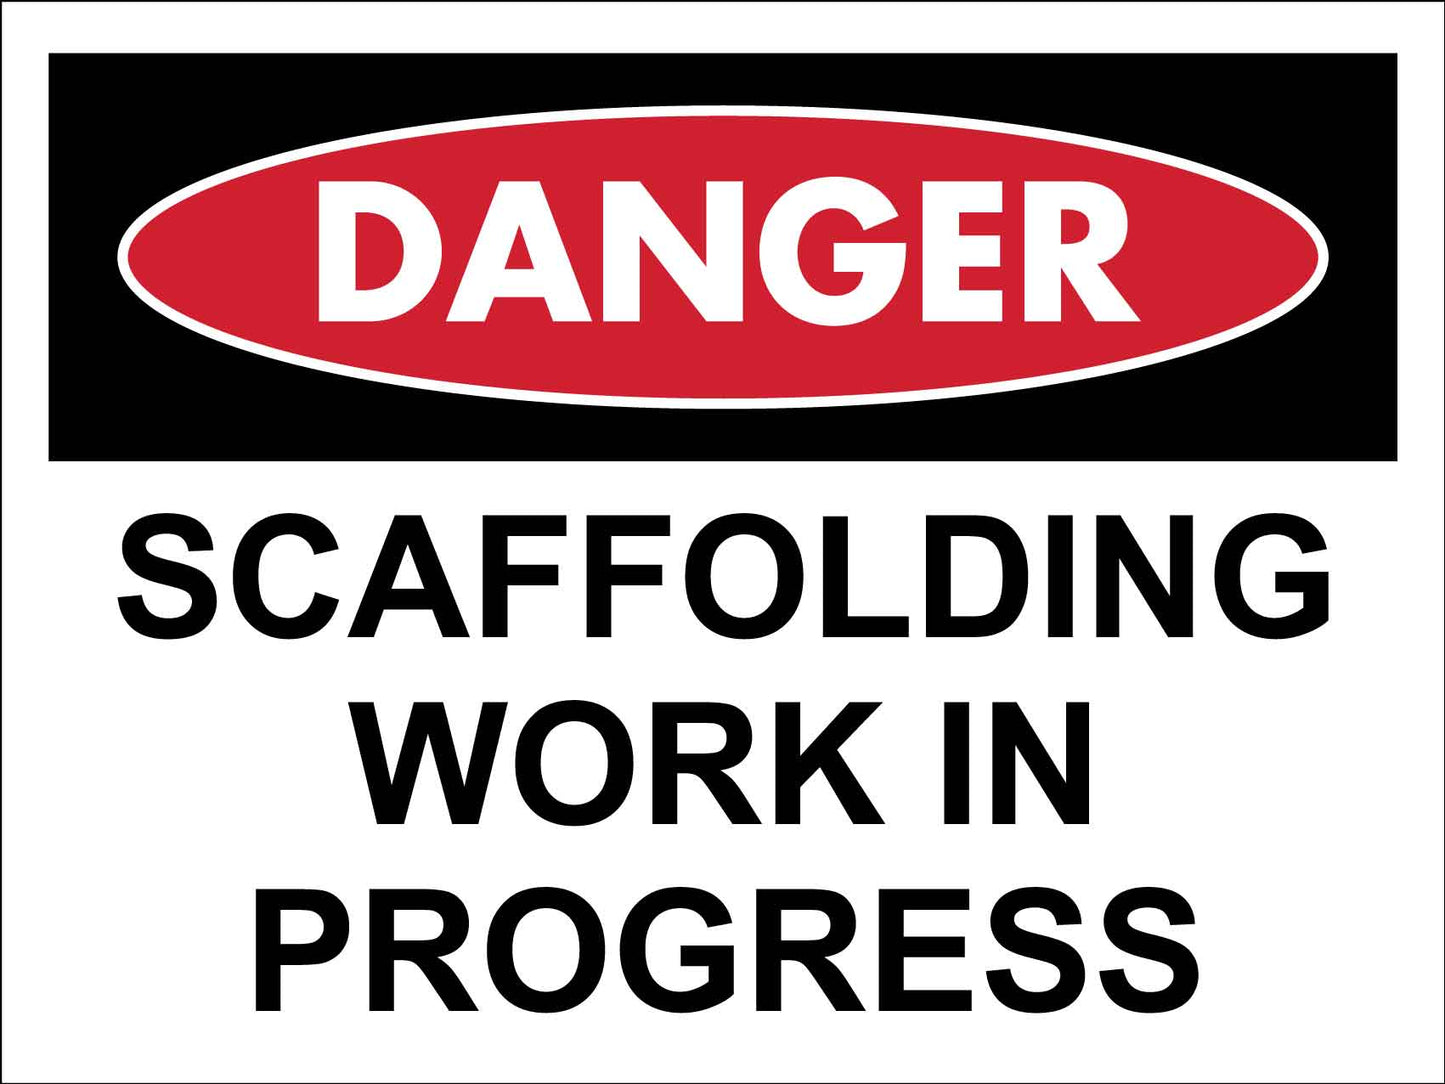 Danger Scaffolding Work in Progress Sign